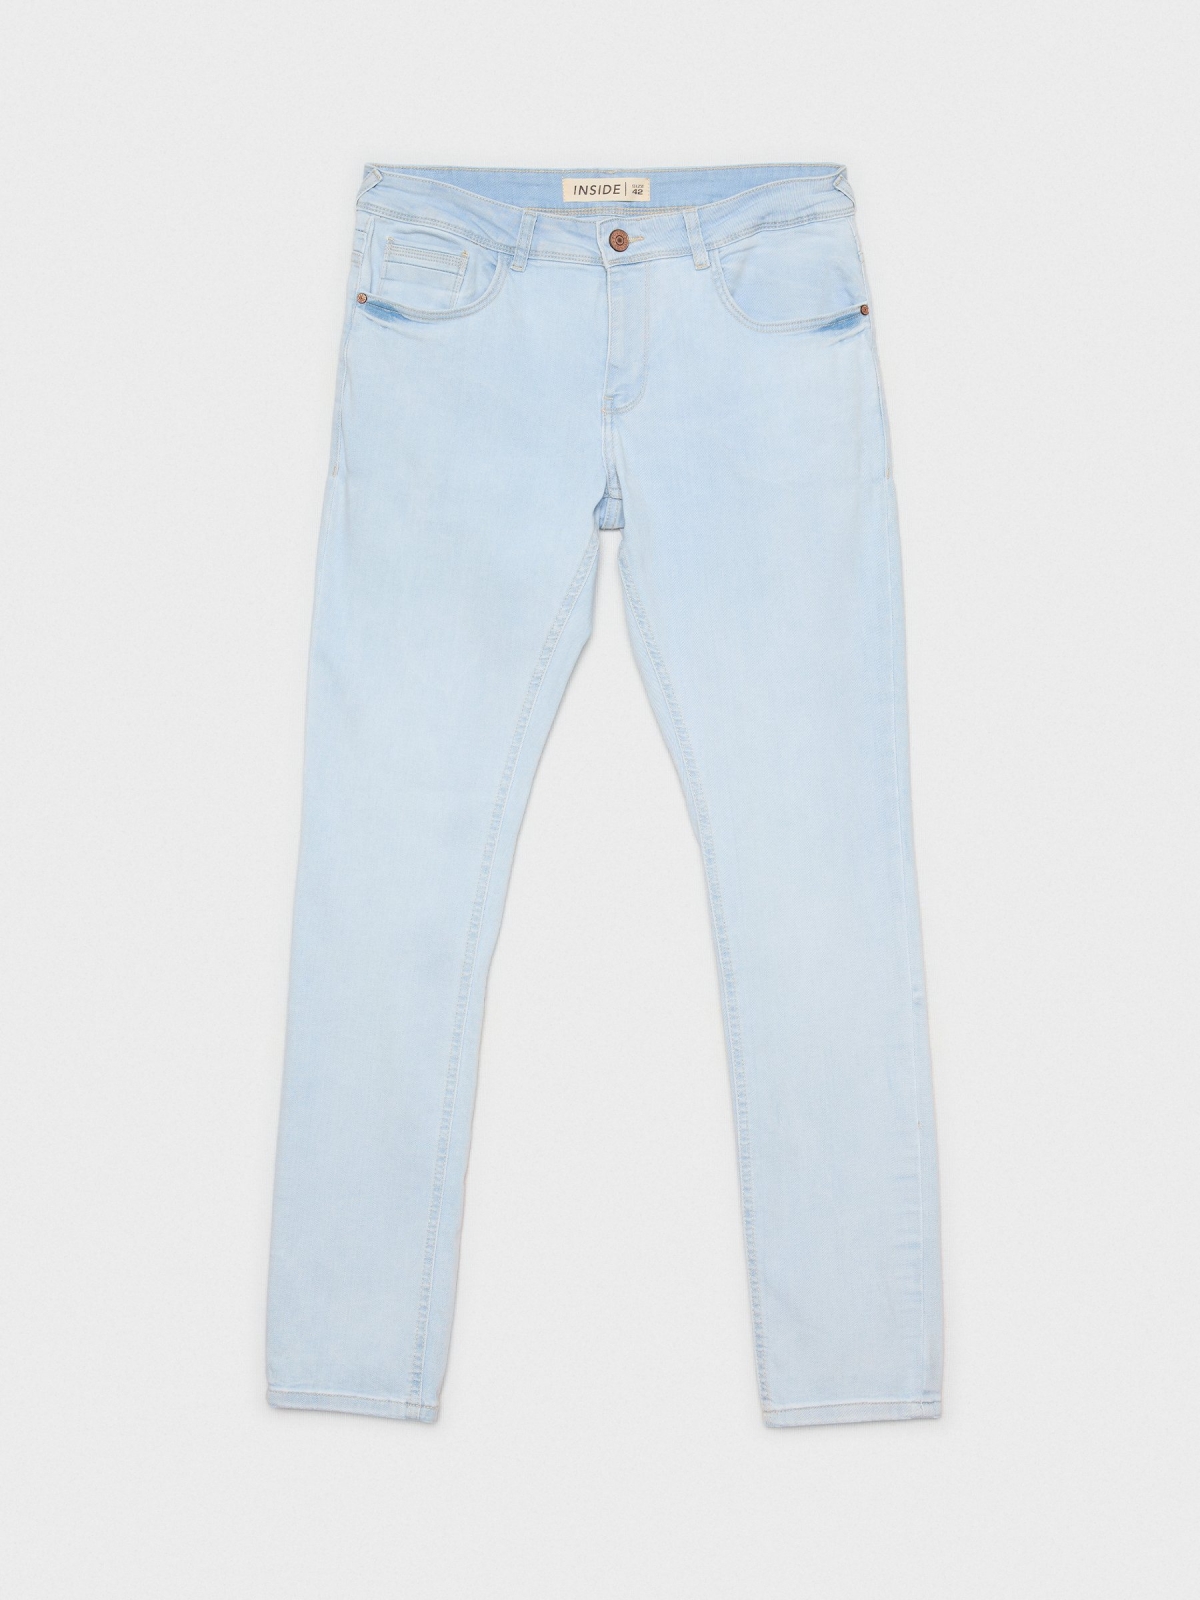  Jeans slim bleached azul/blanco